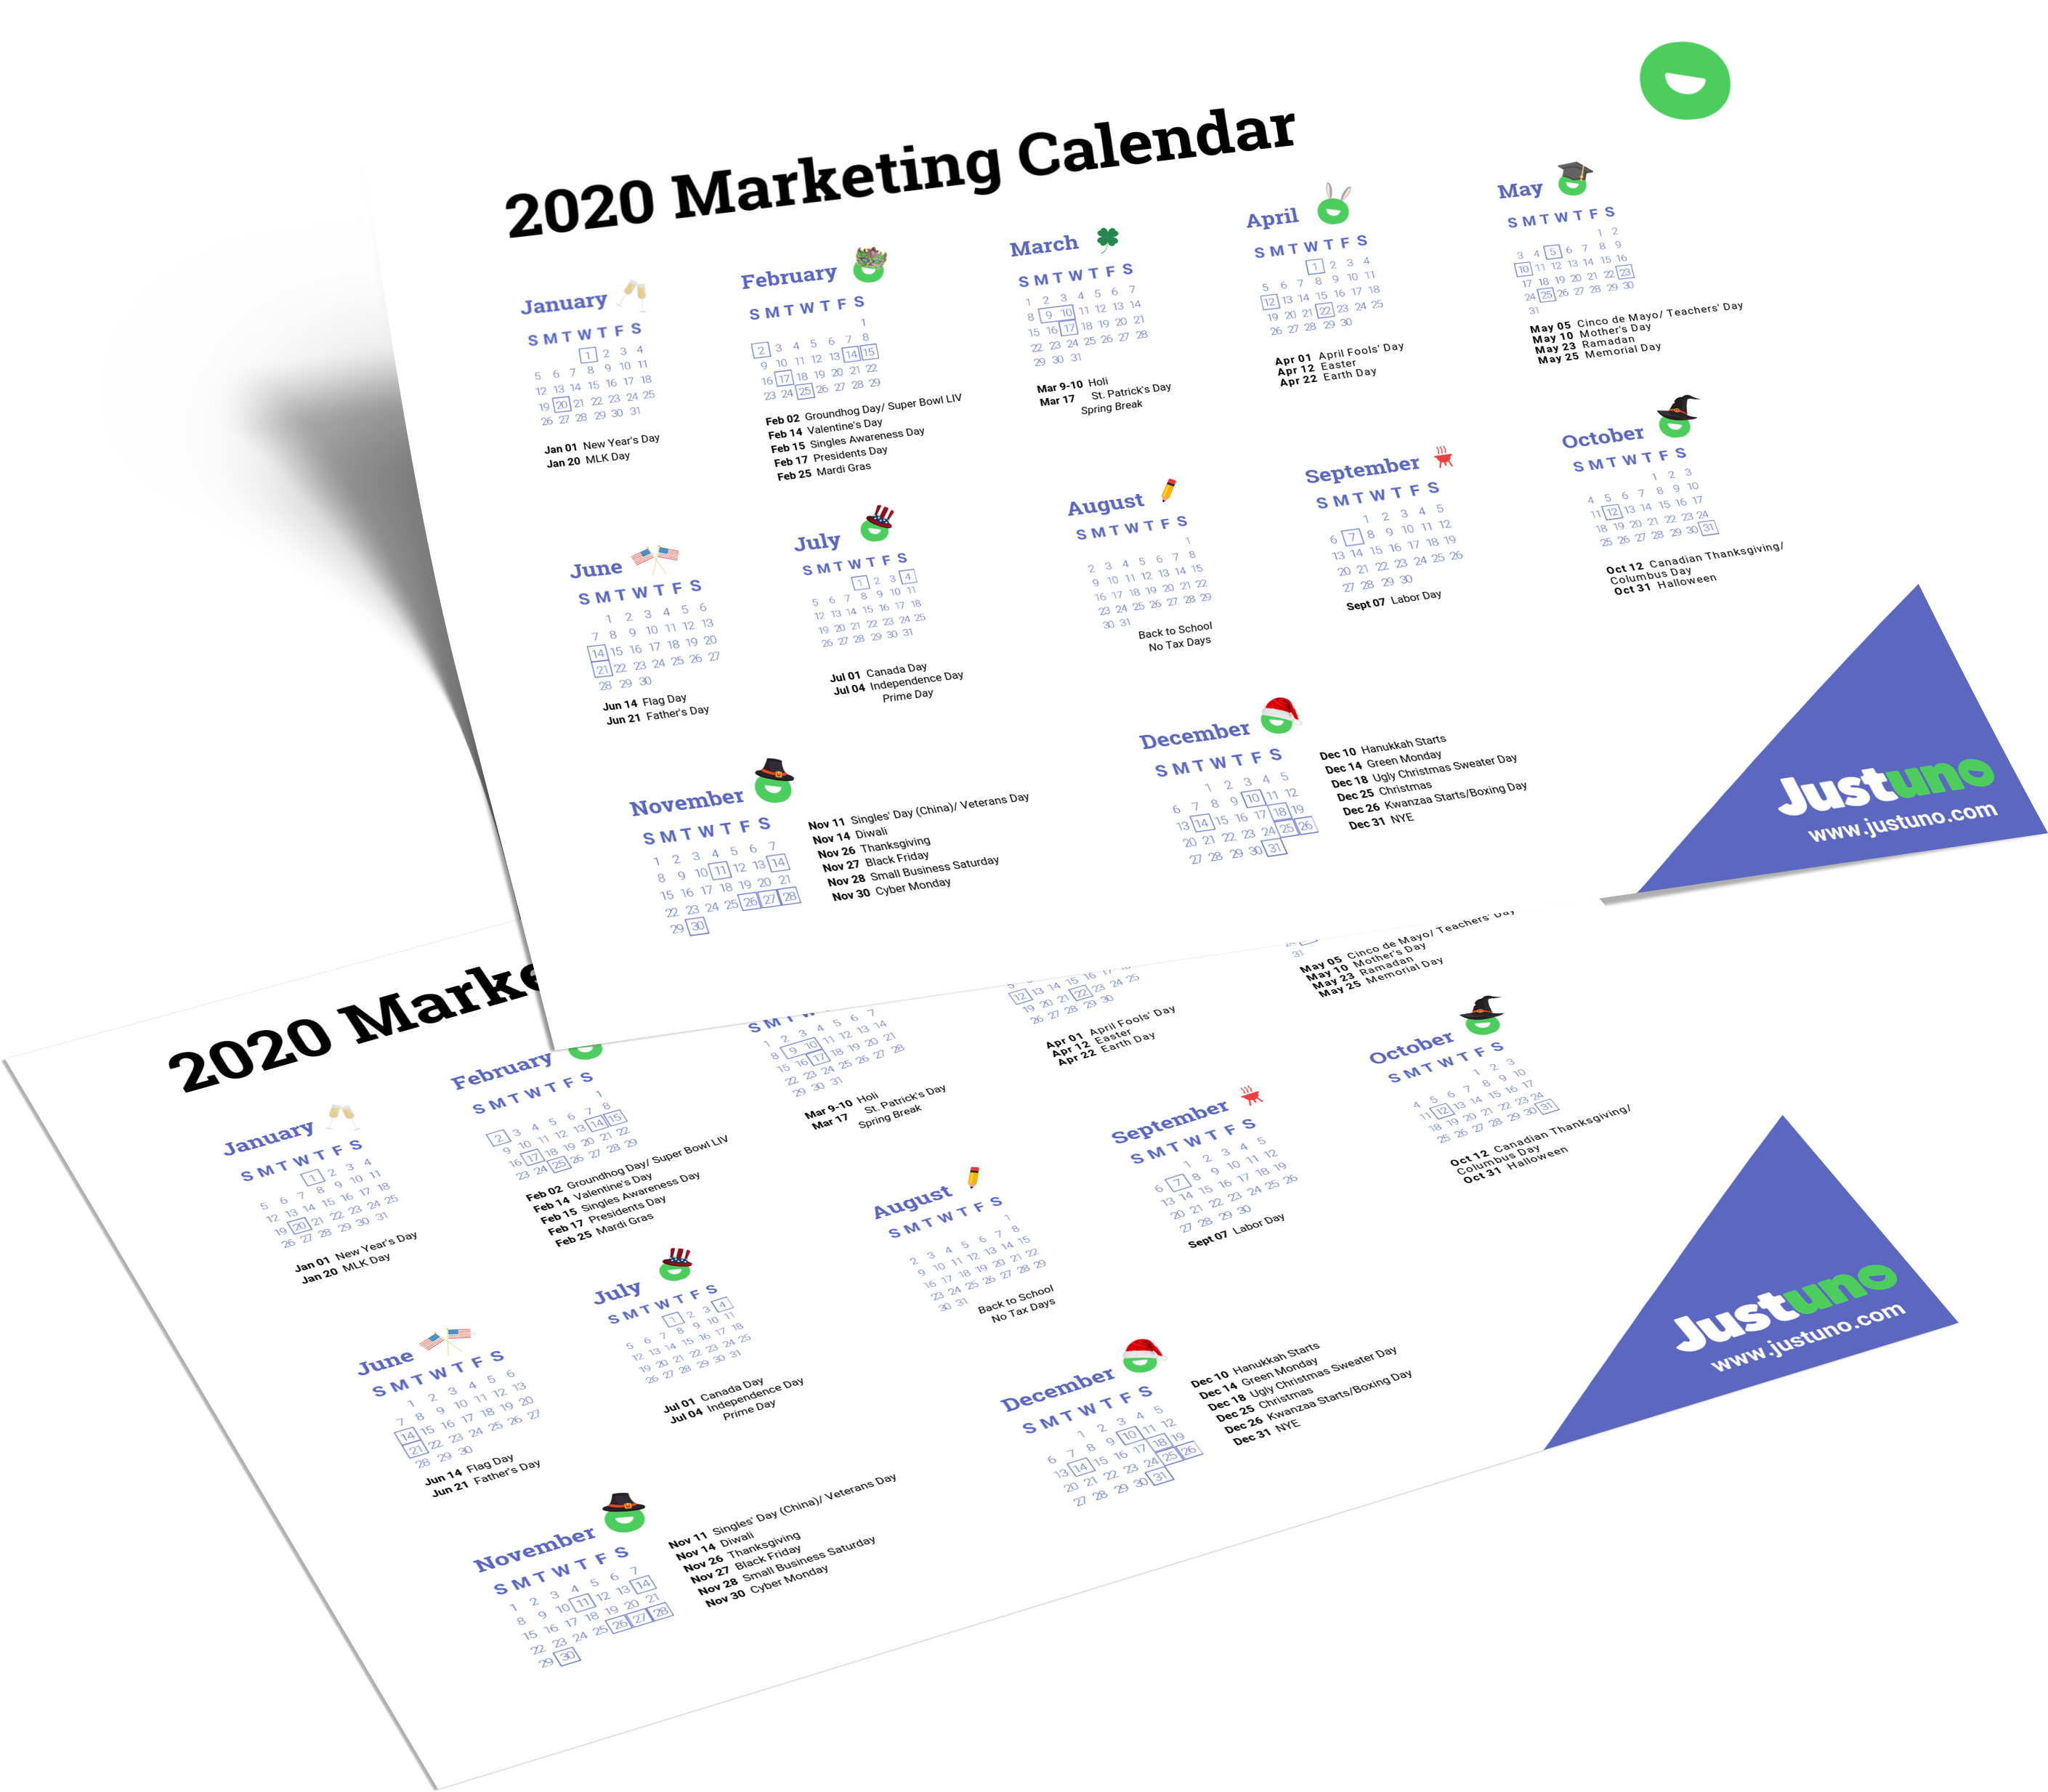 2020 Marketing Calendar